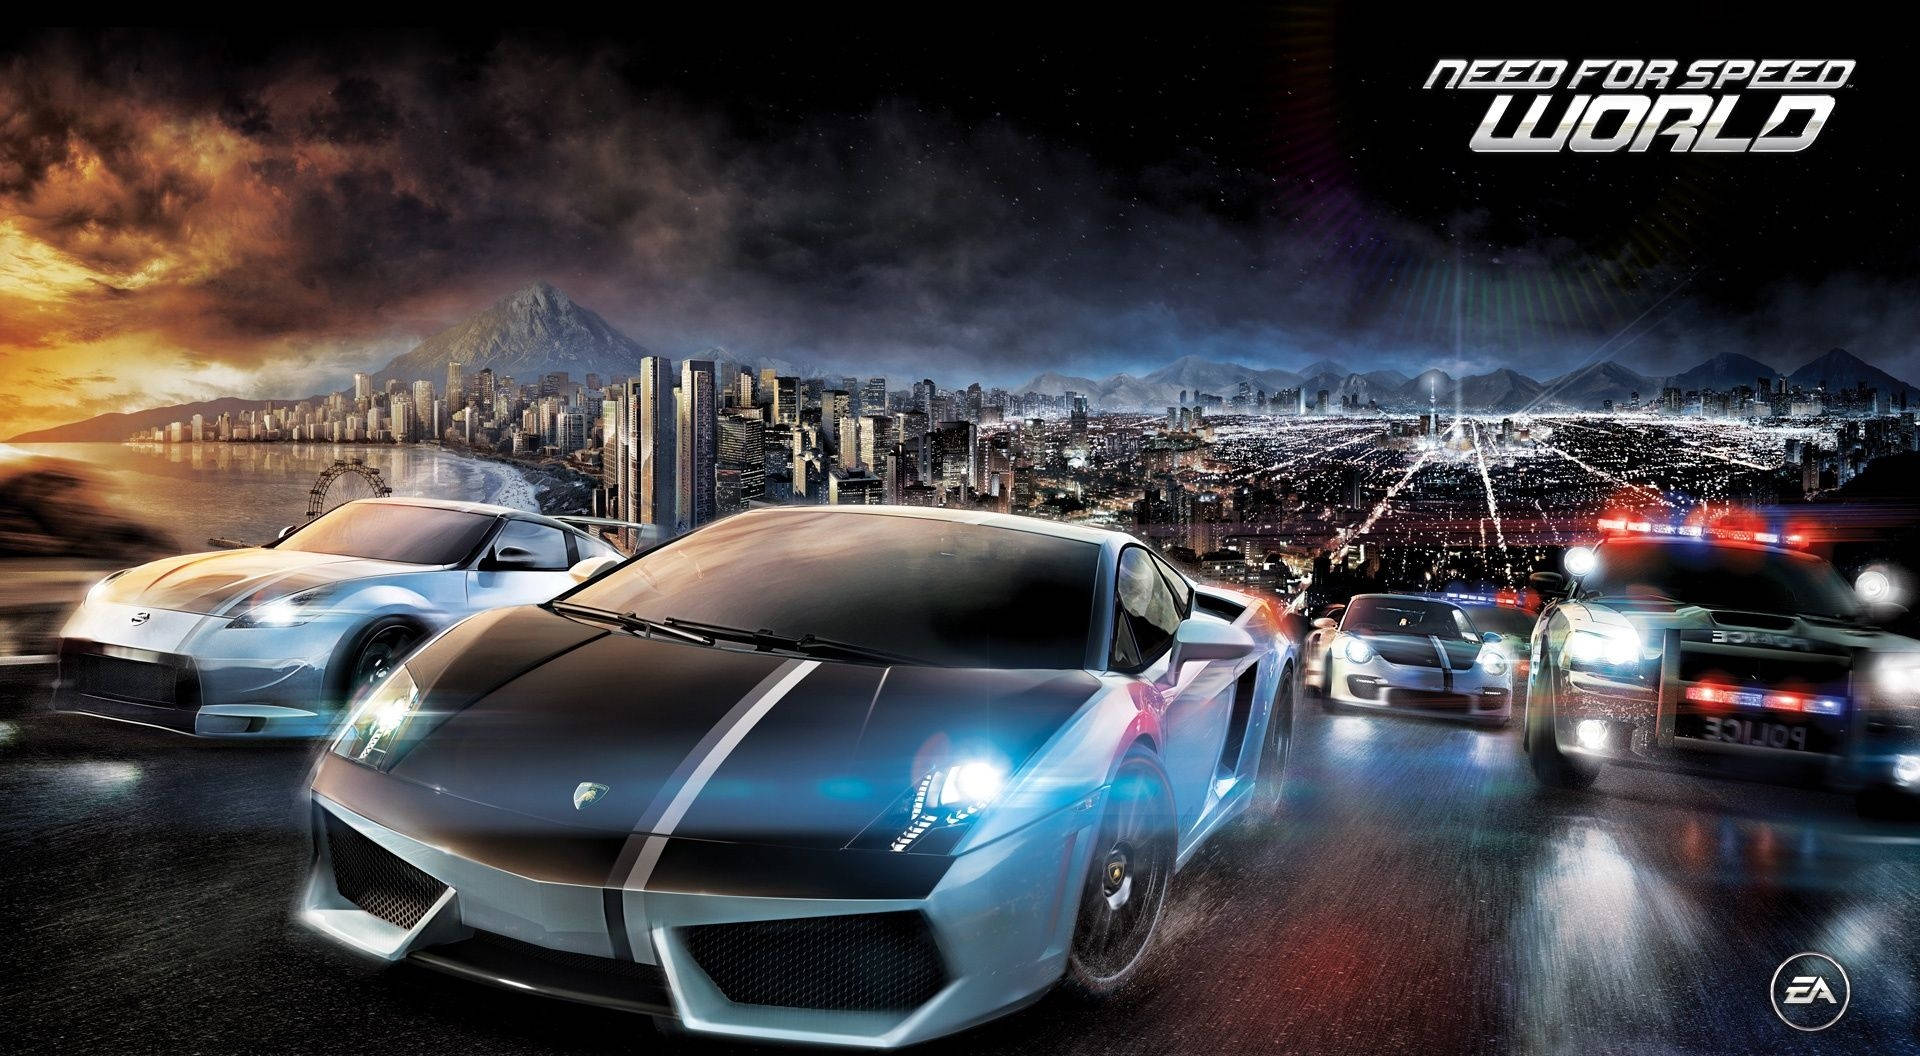 Needfor Speed World - Hintergrundbild Wallpaper